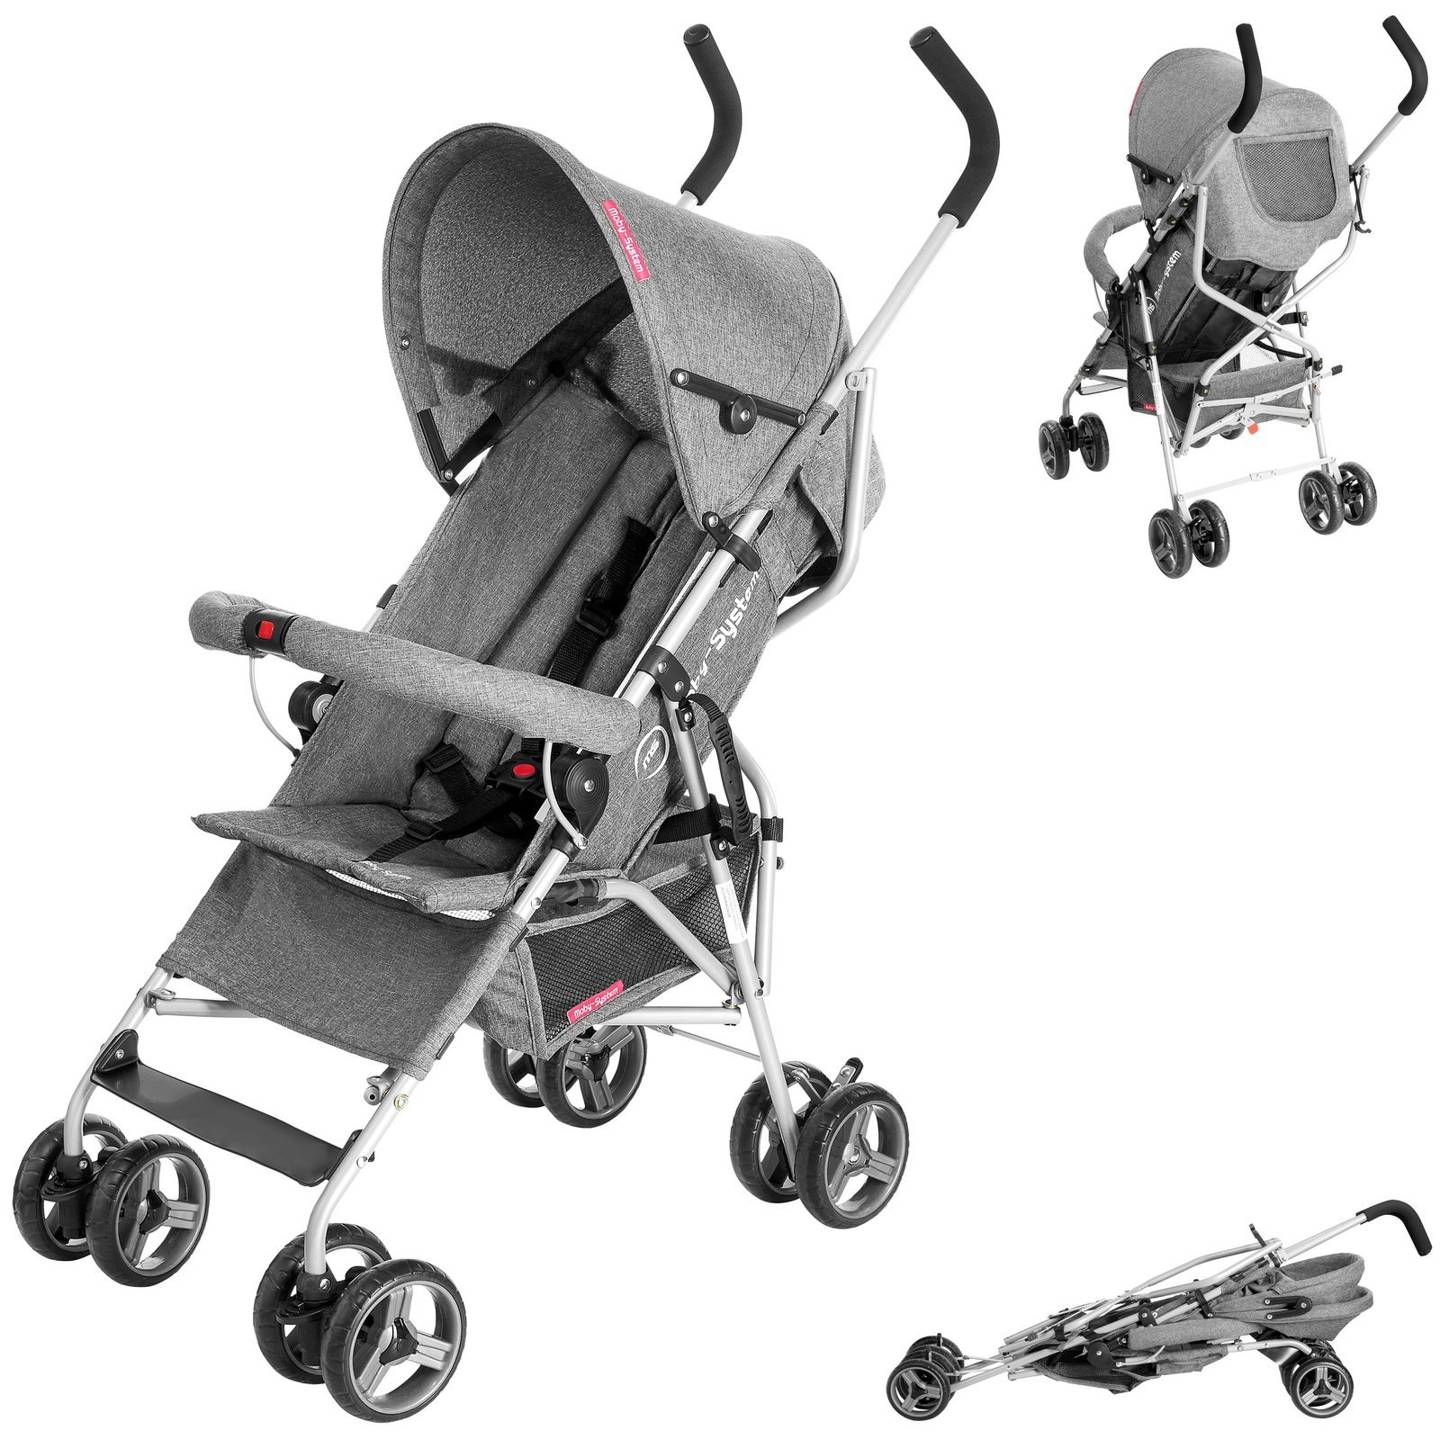 Barton baby stroller - grey